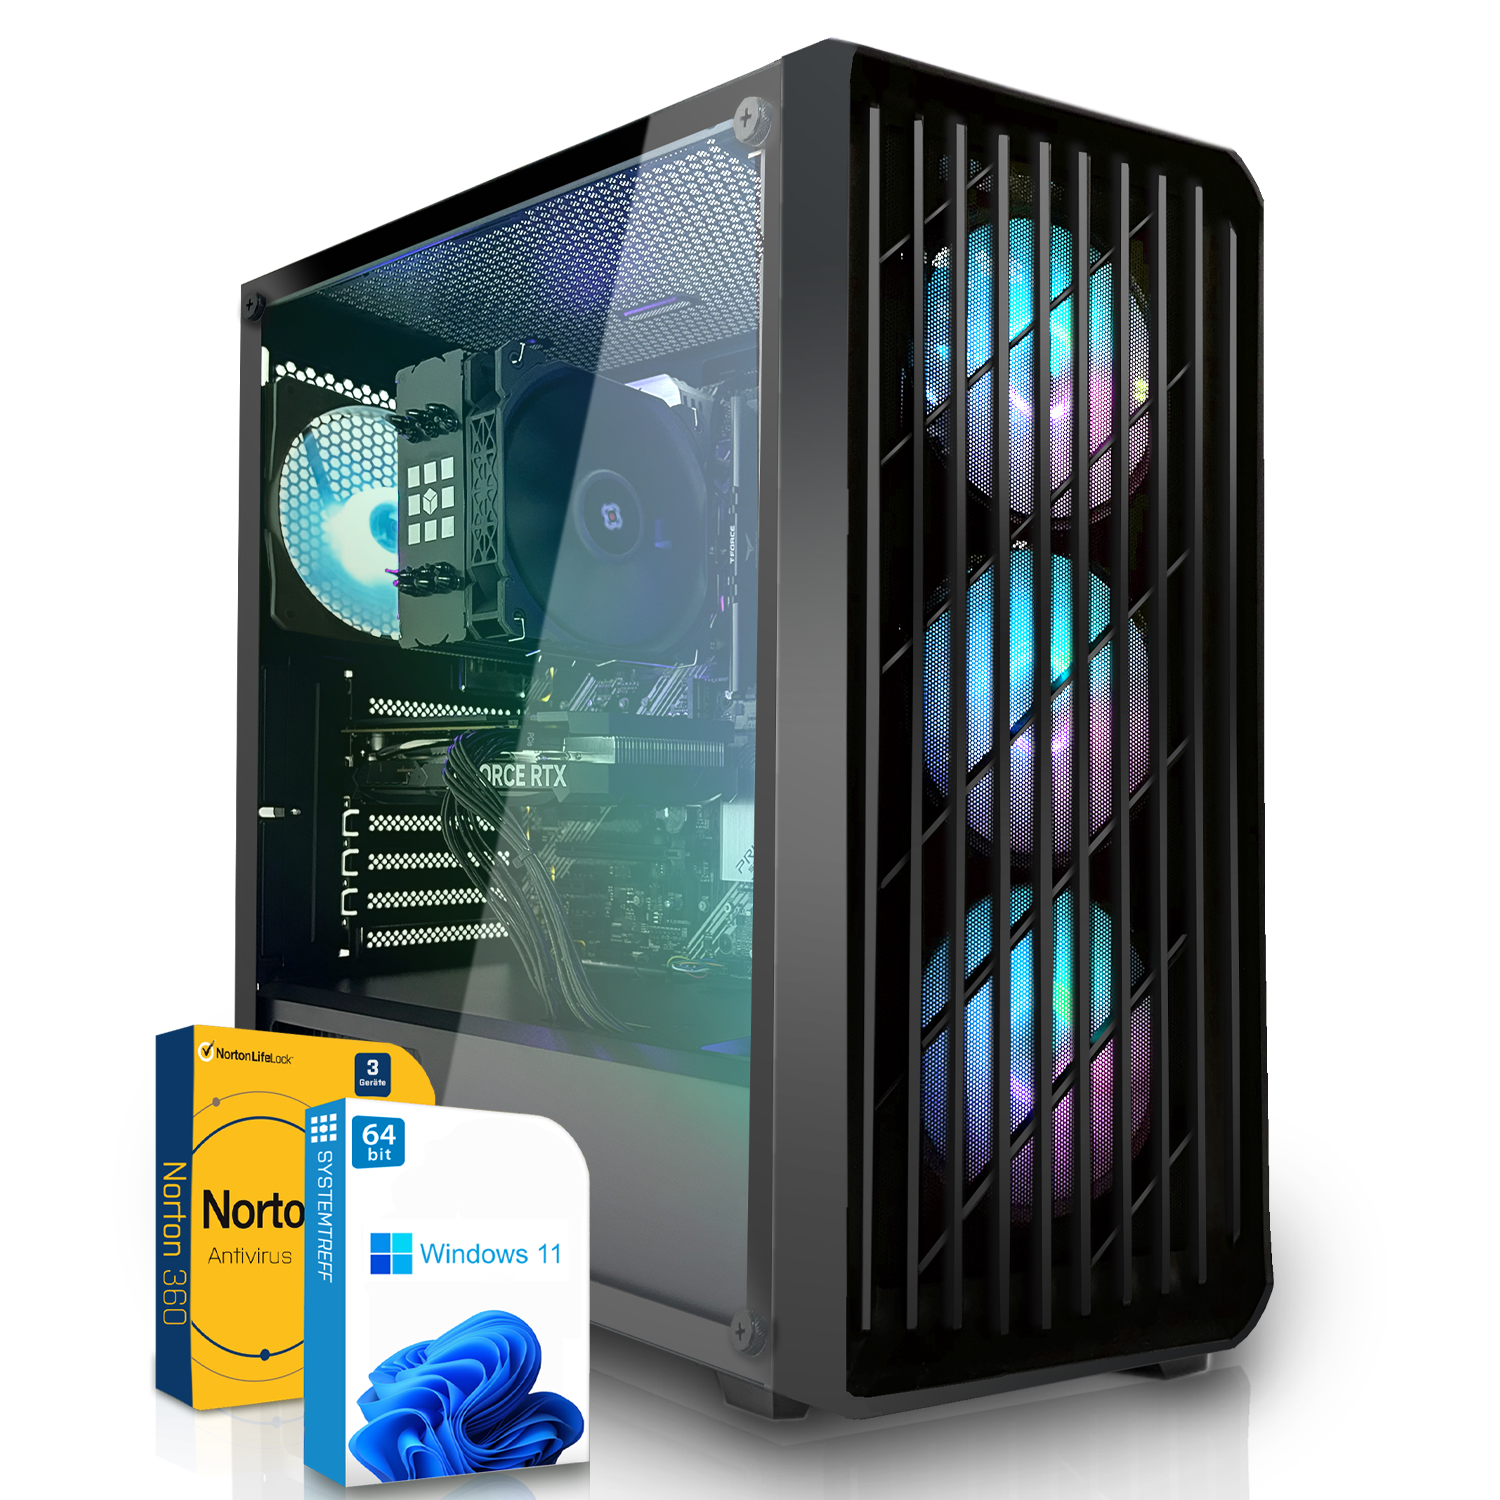 SYSTEMTREFF Gaming Intel PC 11 GB i5-12600K, Core mSSD, GB RTX™ GeForce Intel® Prozessor, Pro, 1000 mit NVIDIA Gaming 16 Core™ 3060 i5 Windows RAM